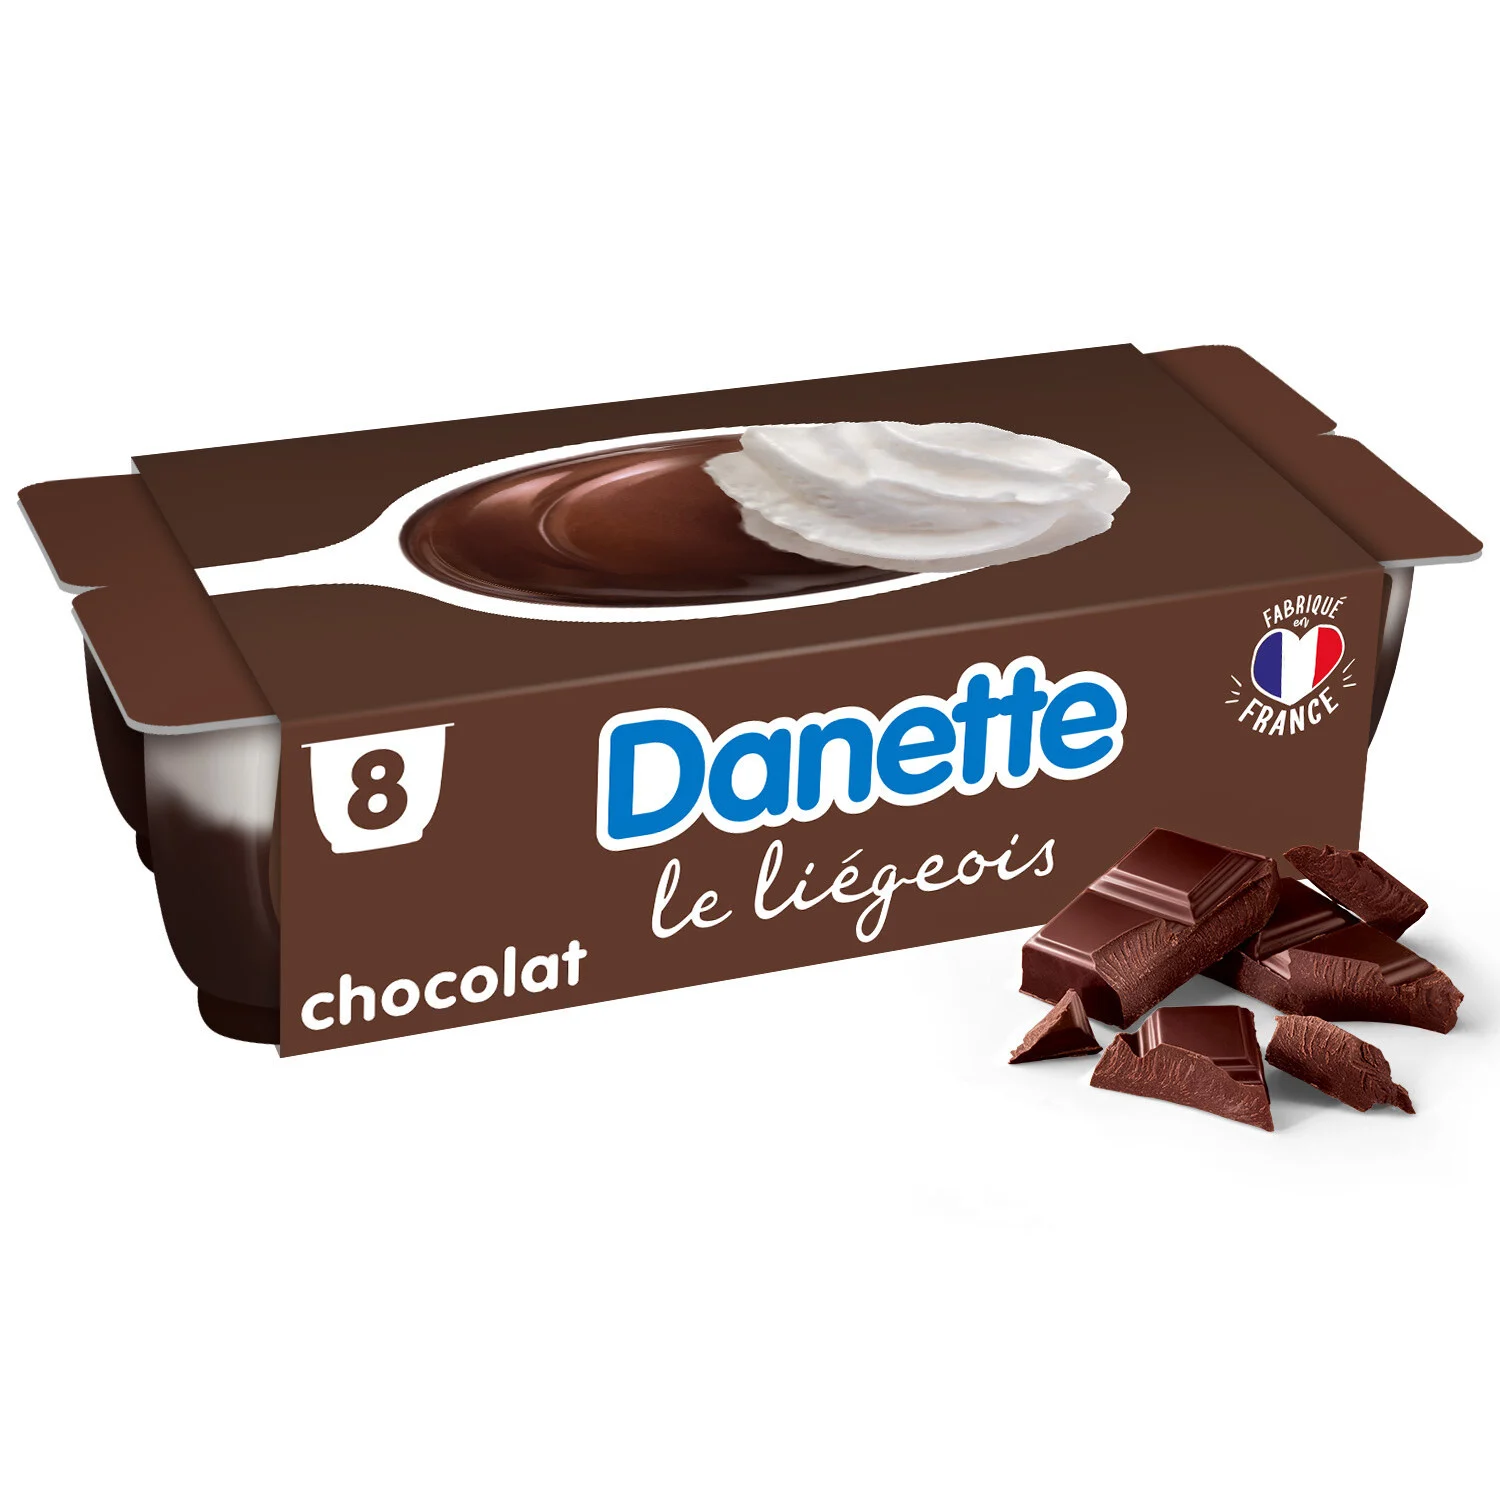 Danone Danette chocolate Liegeois 8x100g